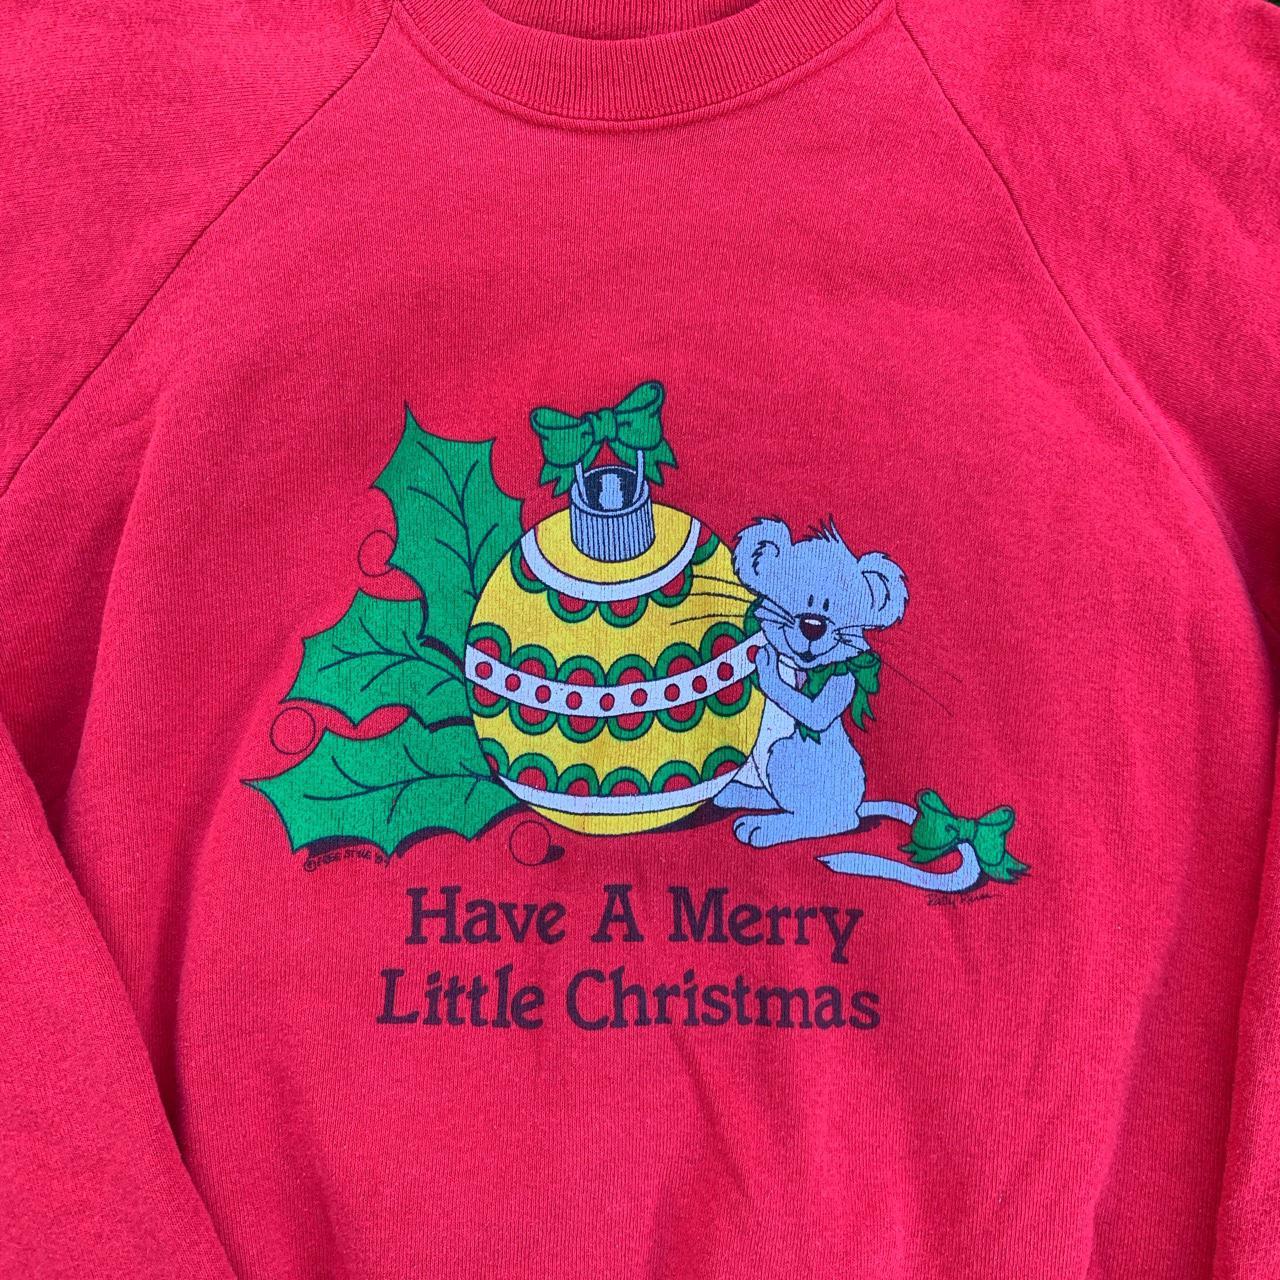 Product Image 2 - Vintage Christmas Sweatshirt

• great vintage